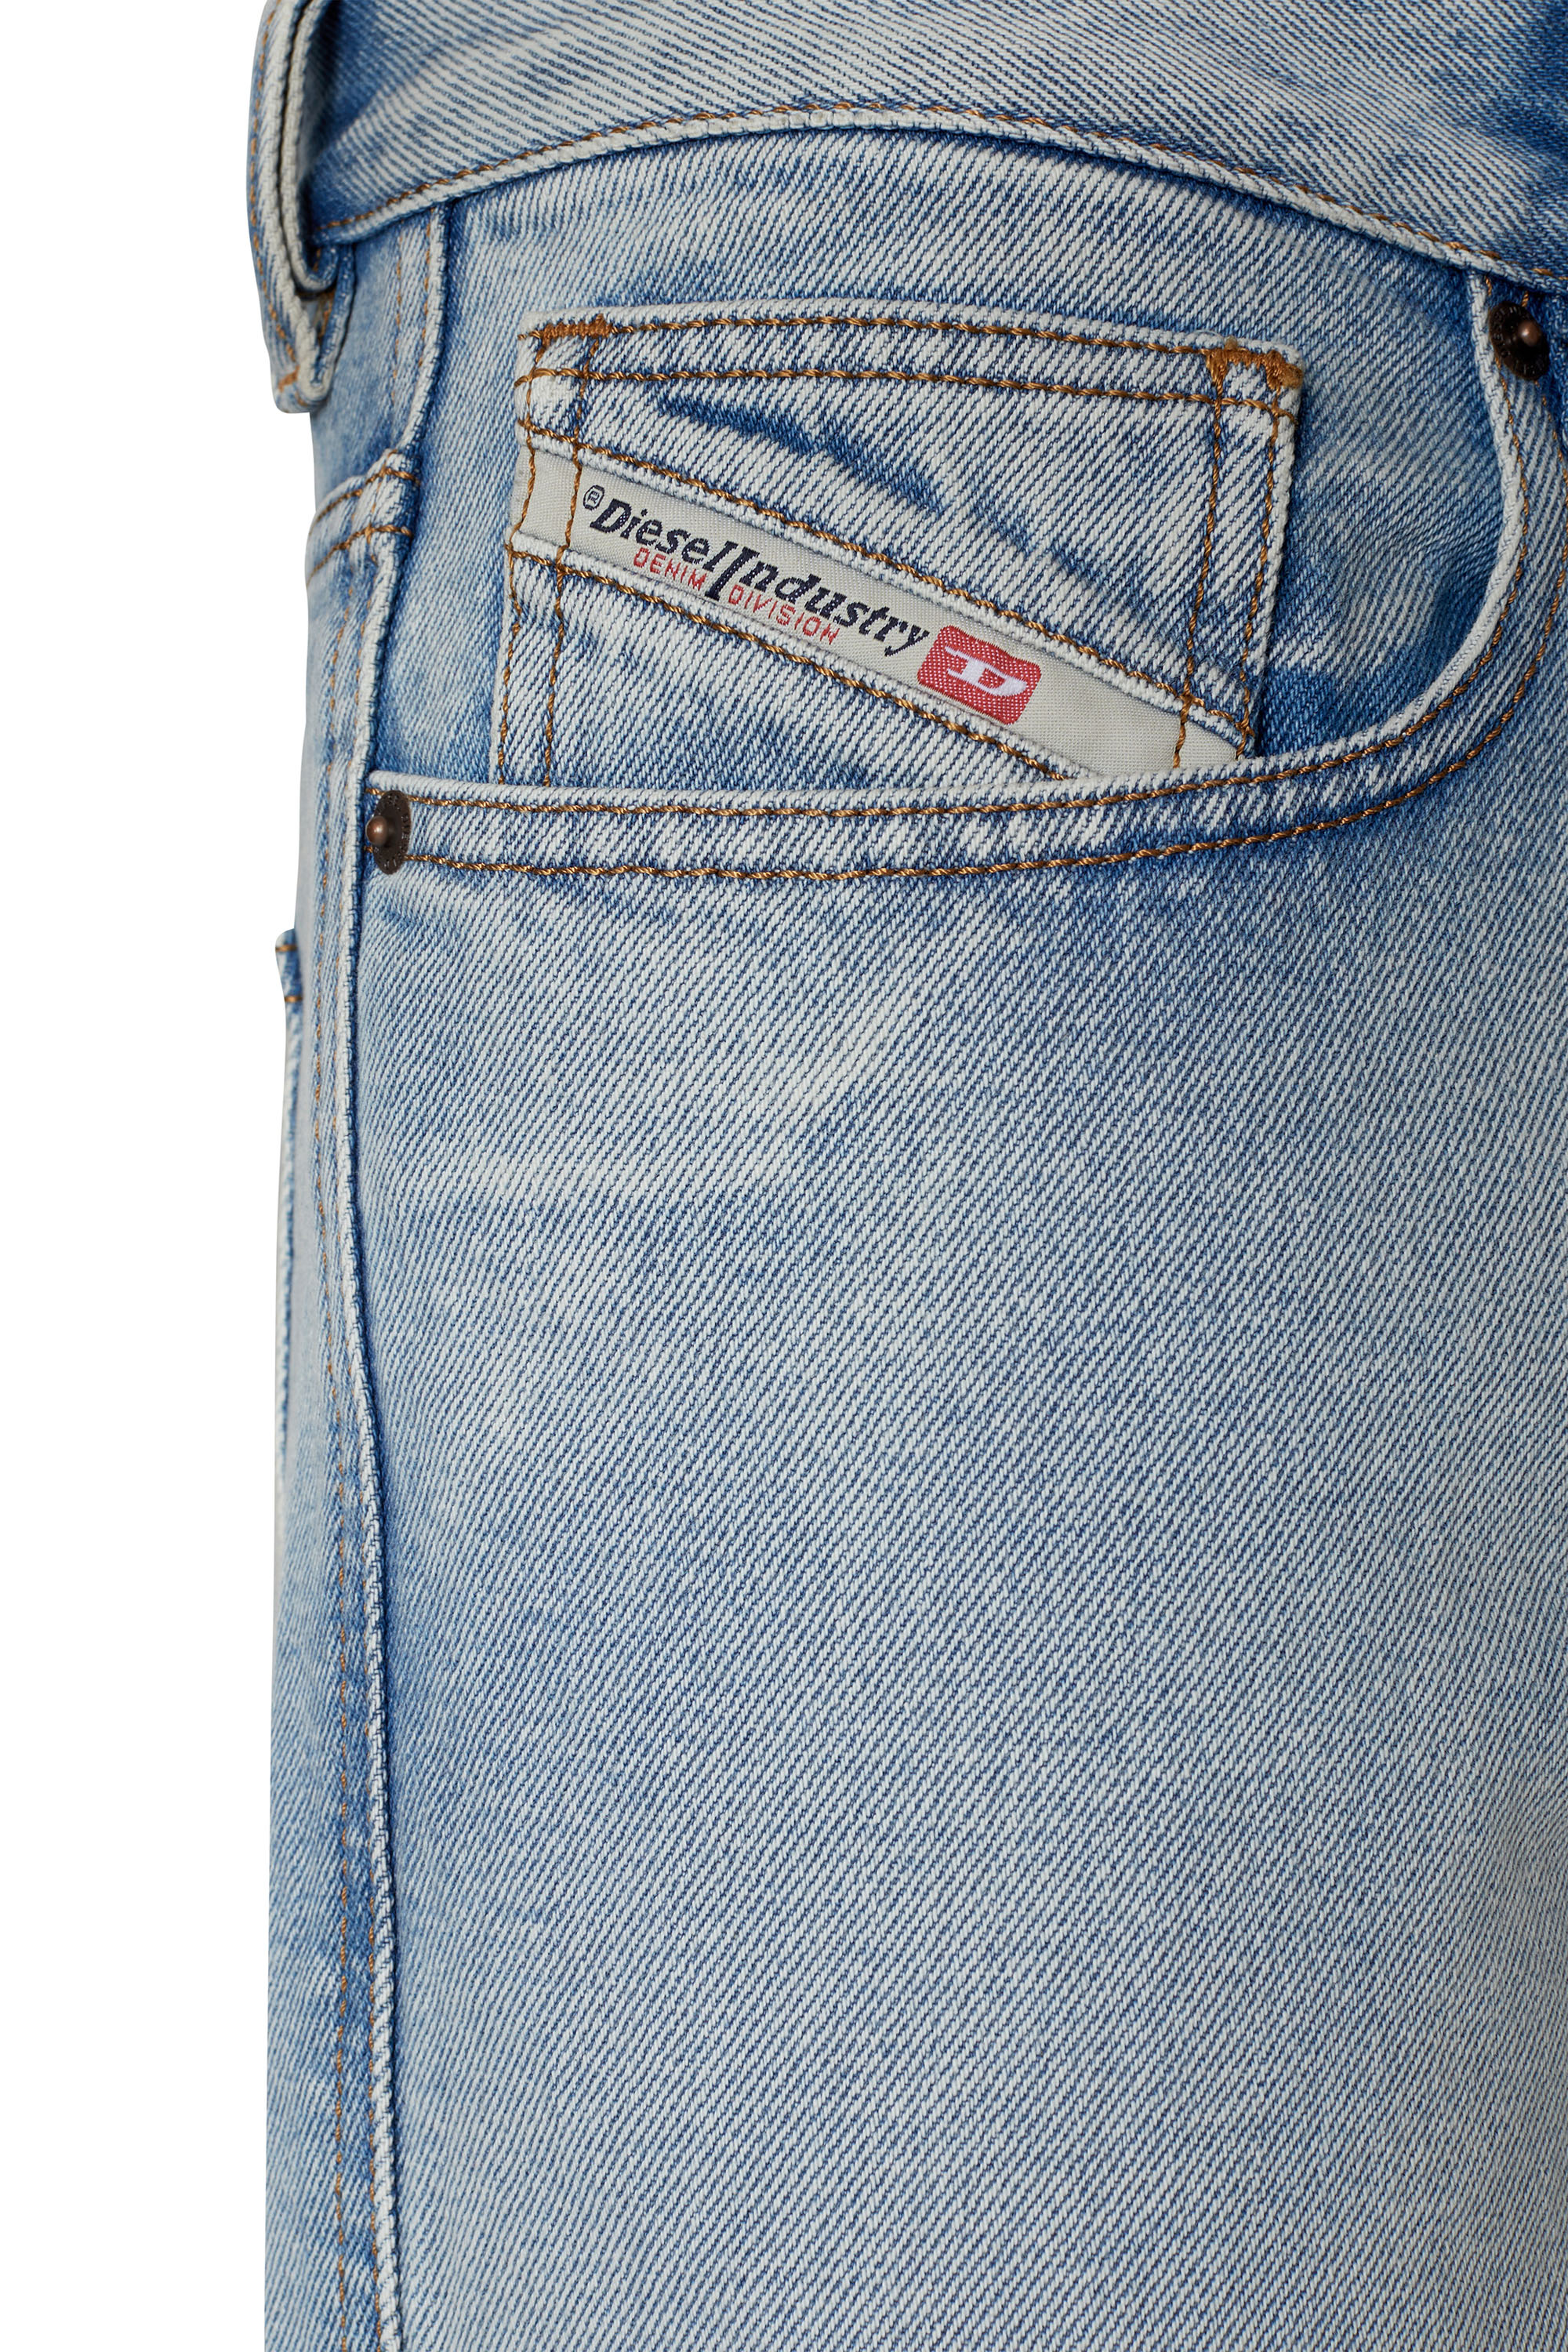 Diesel - Straight Jeans 2010 D-Macs 09C14,  - Image 5